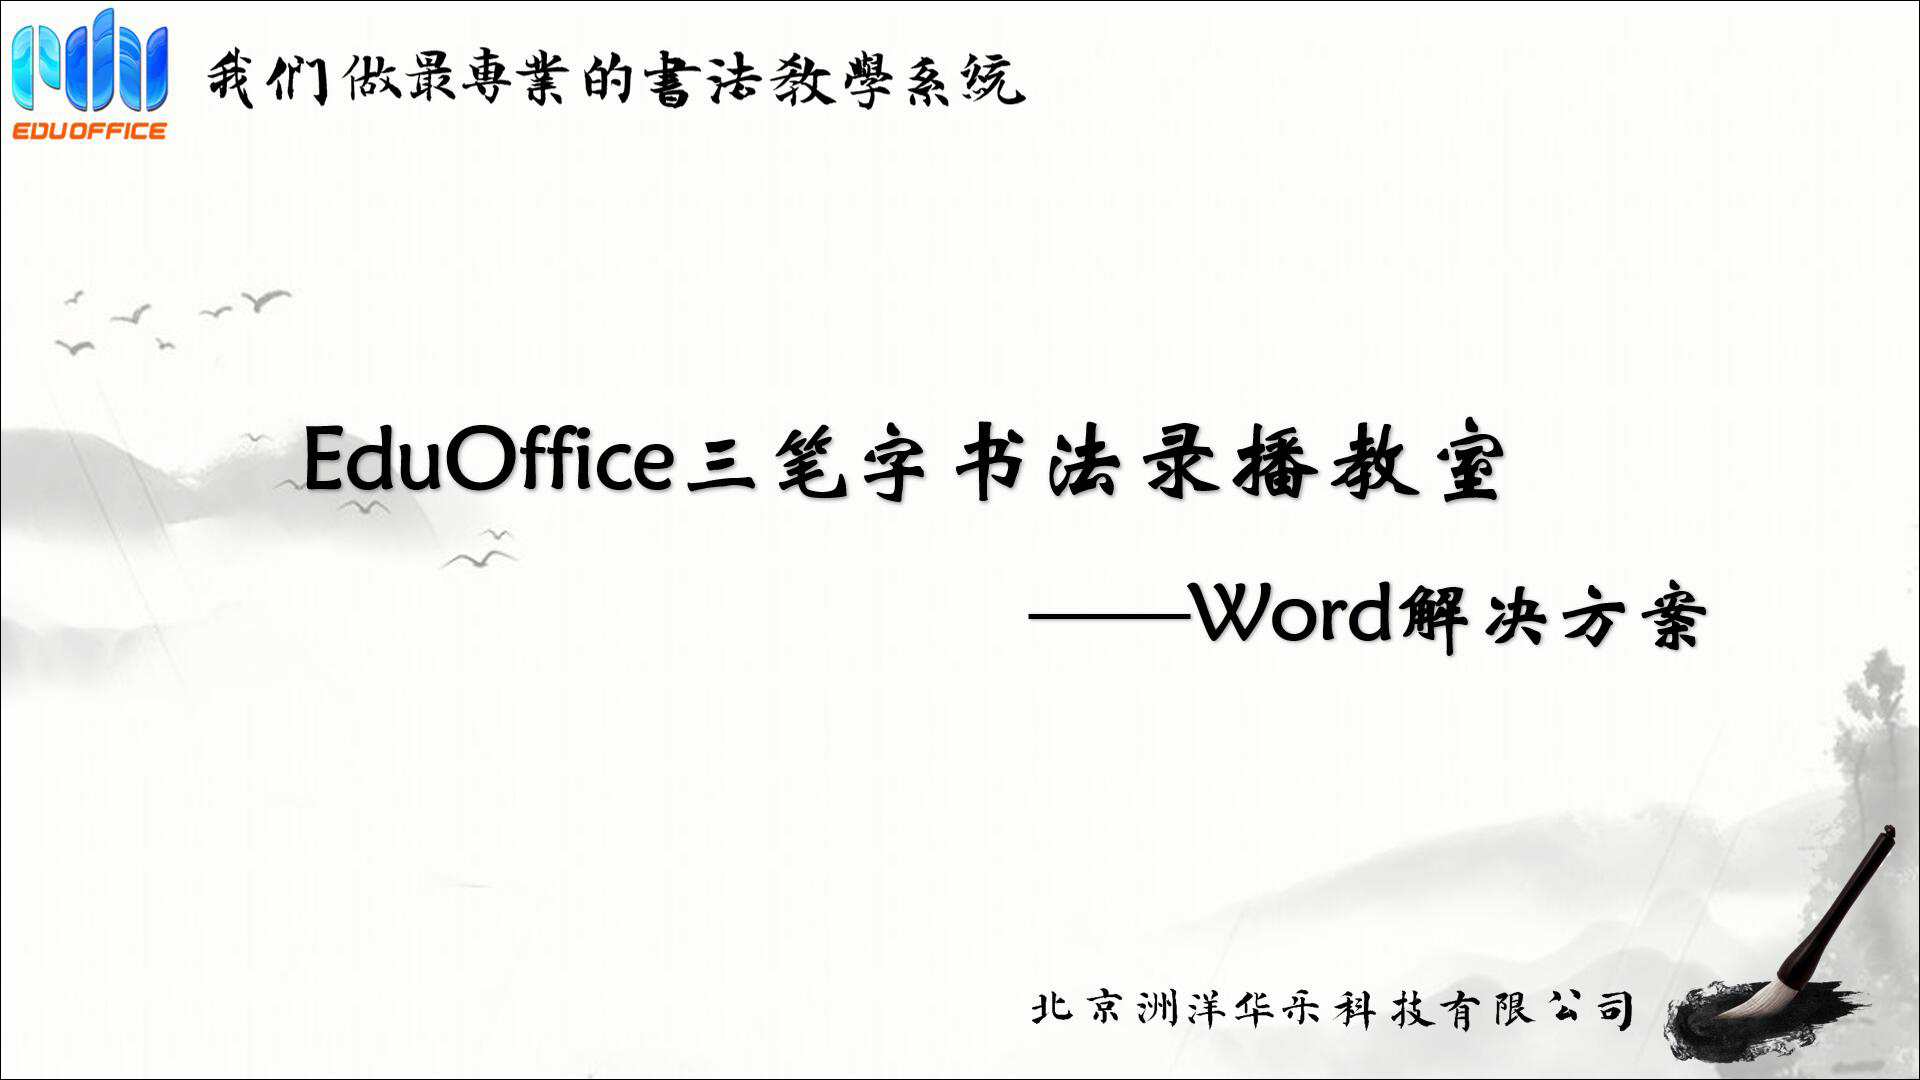 EduOffice三笔字录播教室-解决方案